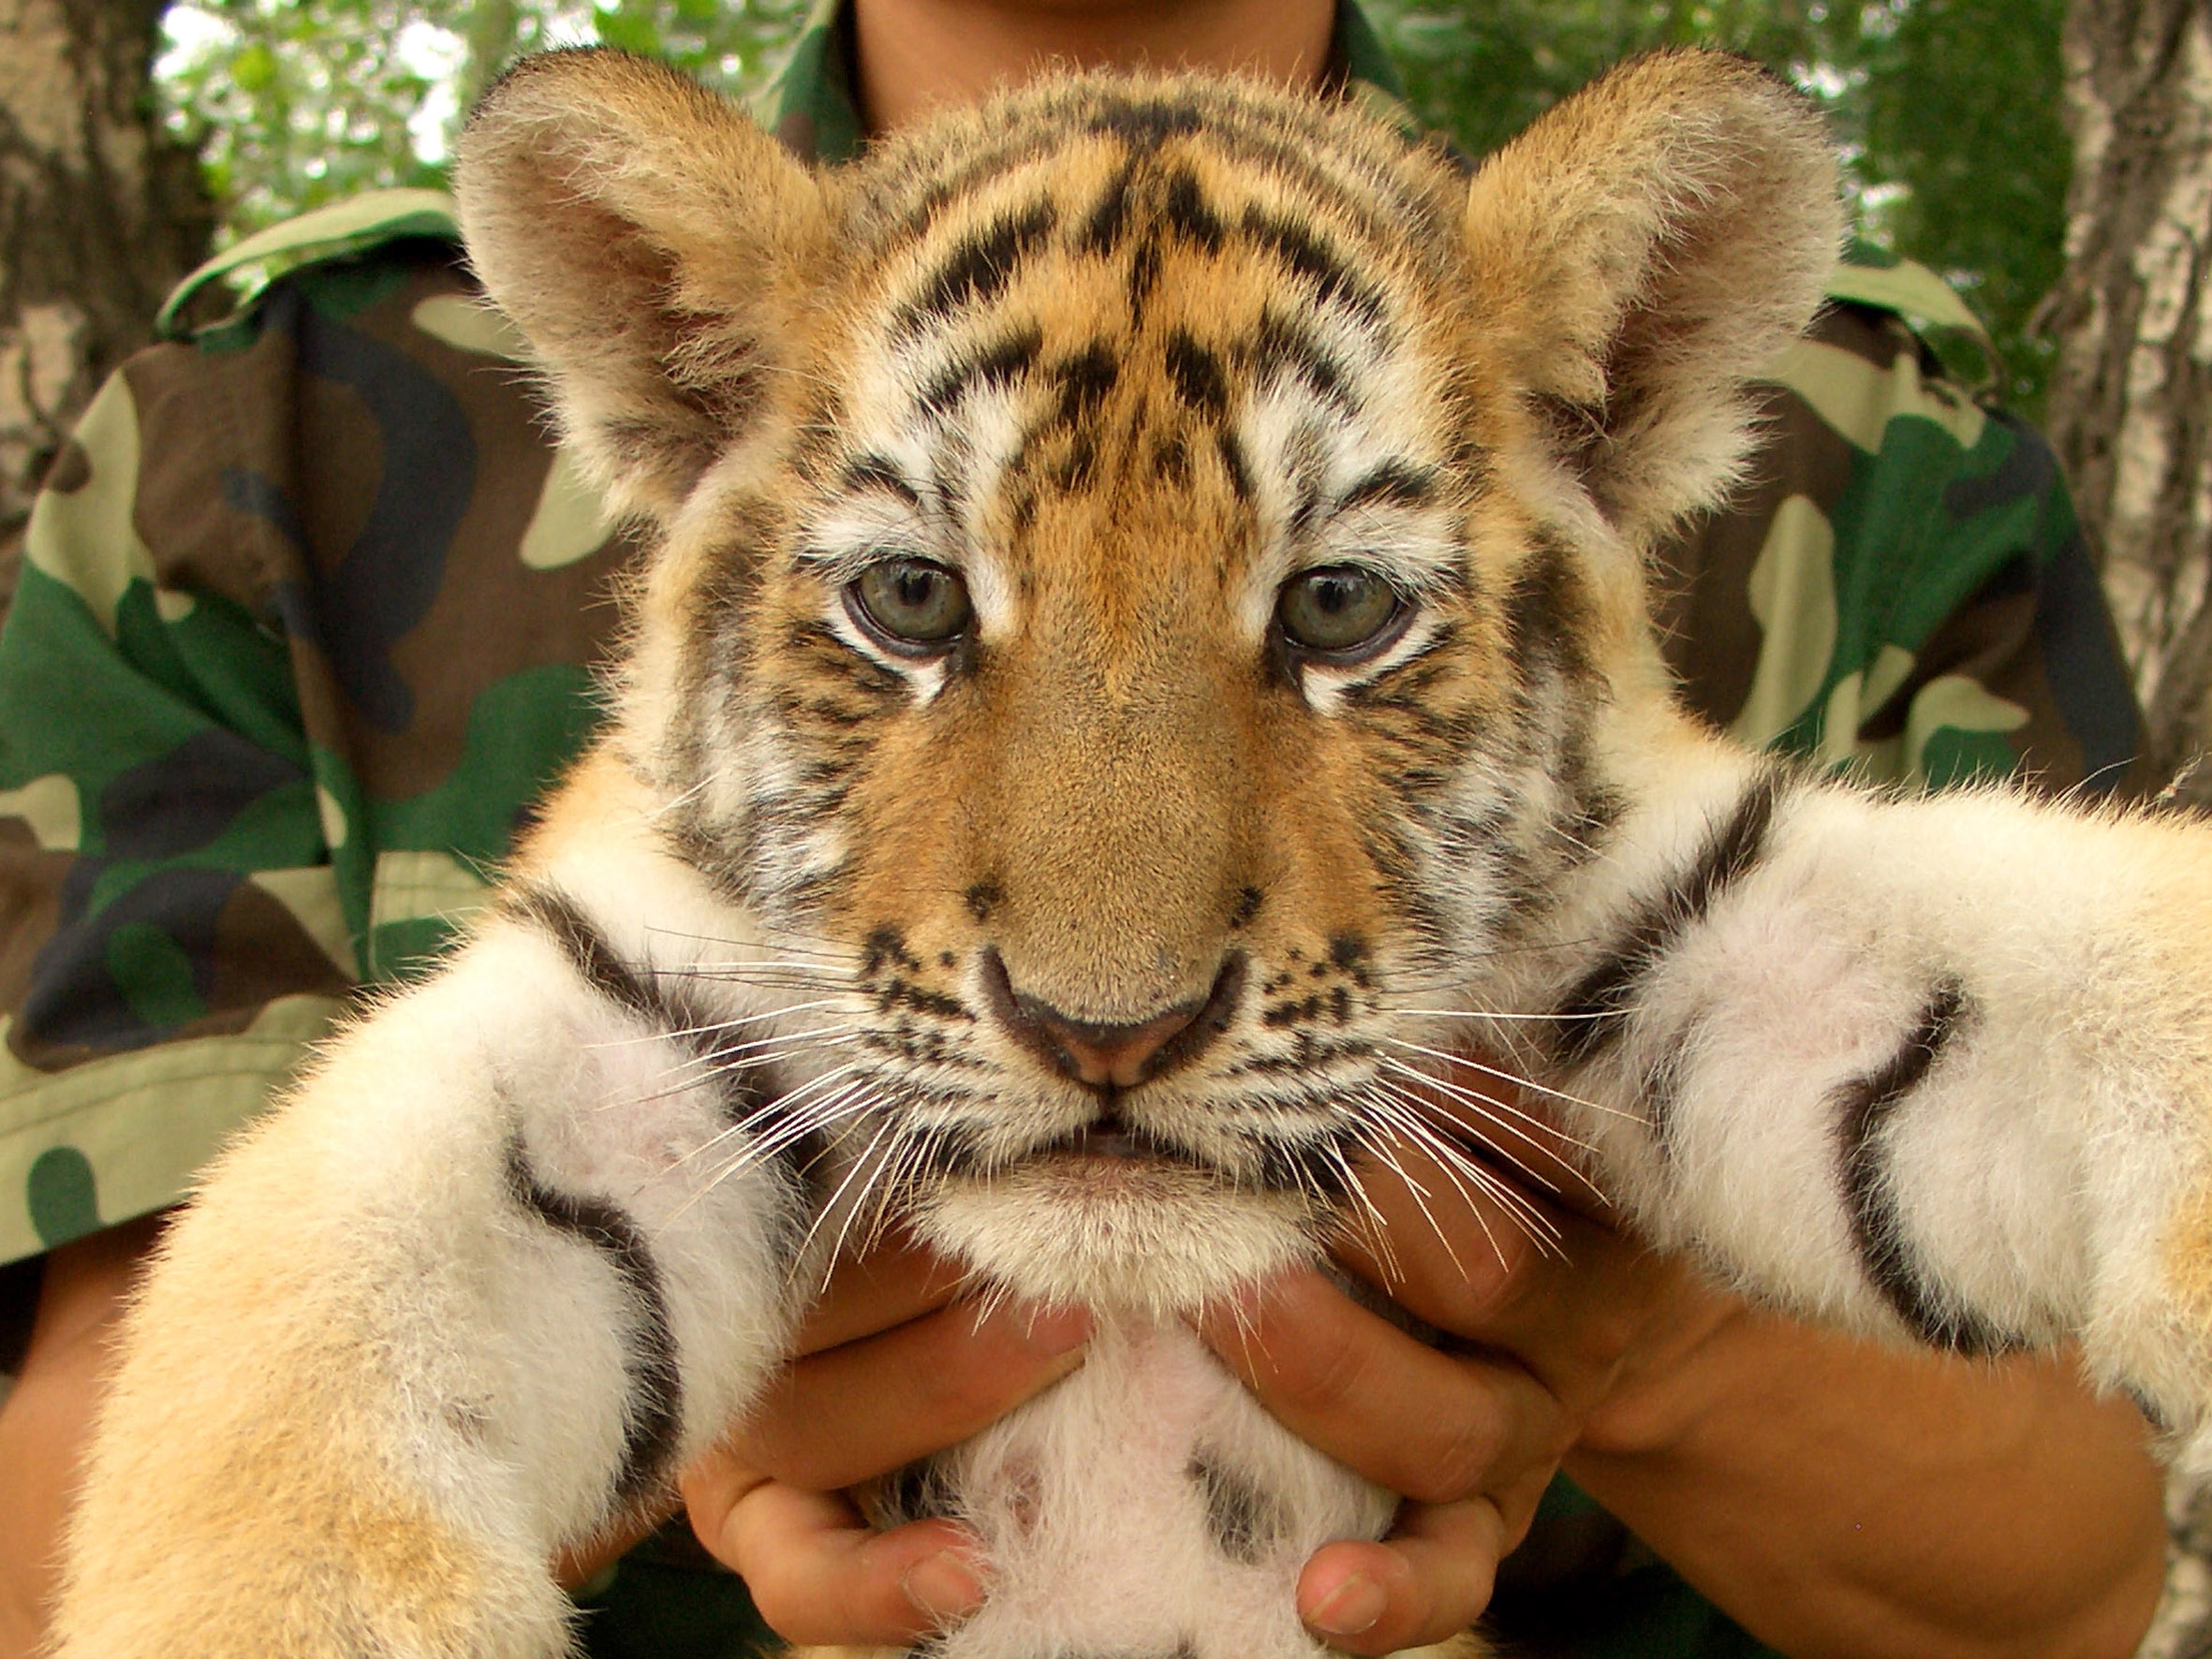 animals, young, muzzle, hands, tiger, kid, tot, joey, tiger cub